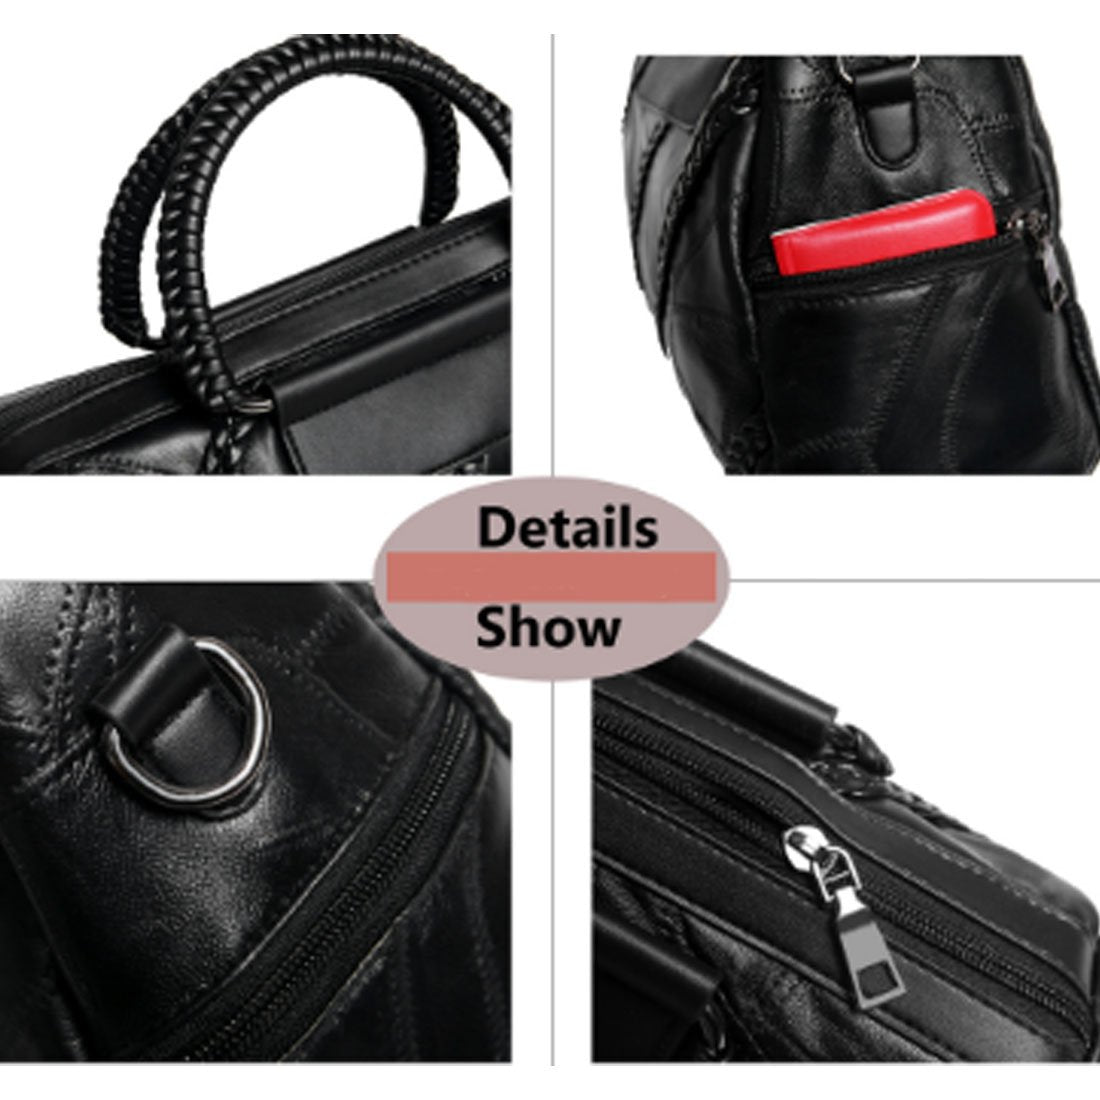 Women'S Handbags Purses Totes Top Handle Bags, Black1 - ebowsos